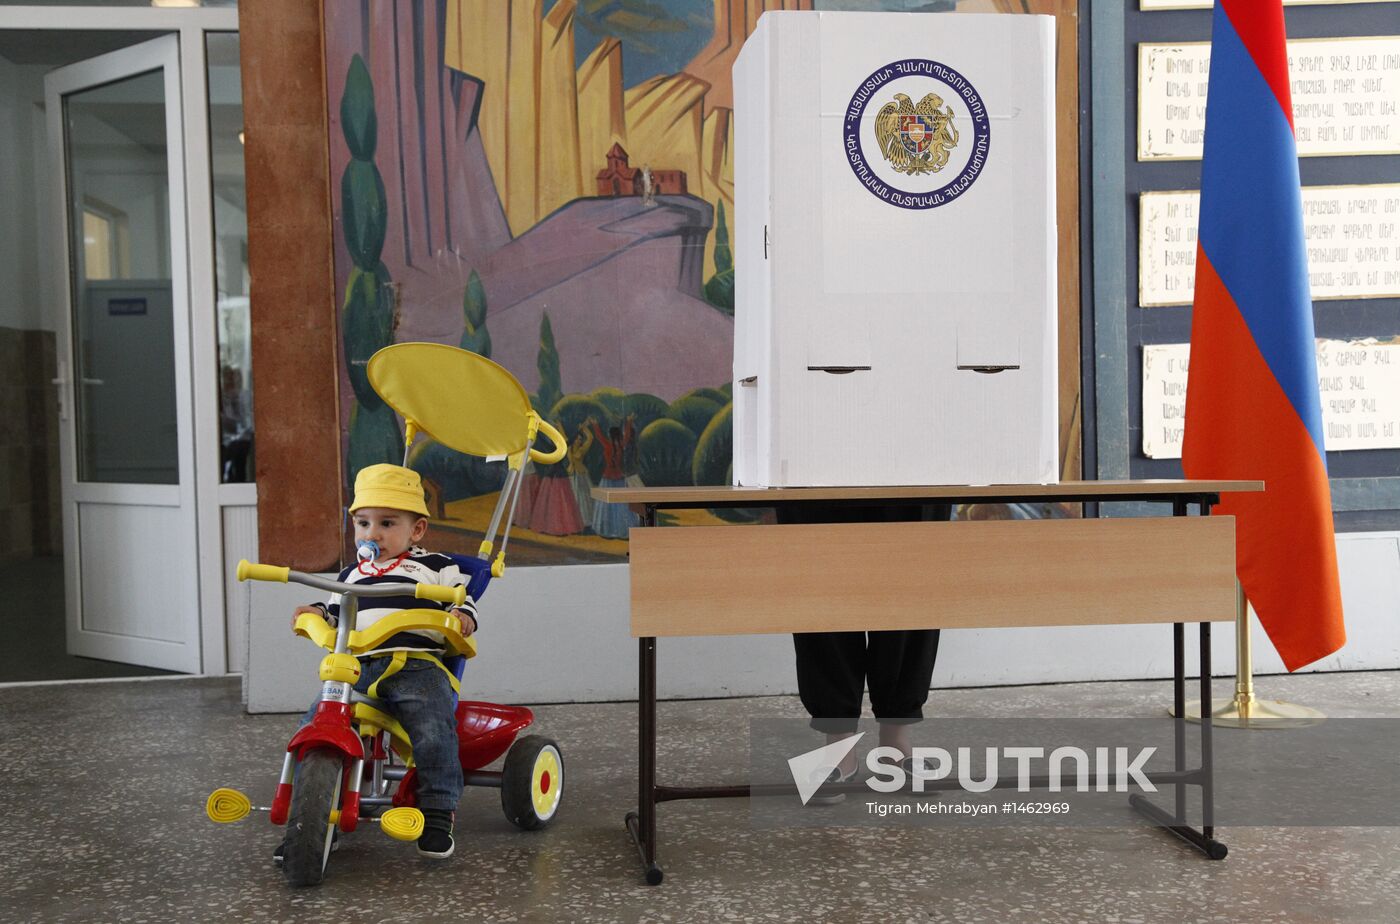 Yerevan City Council elections